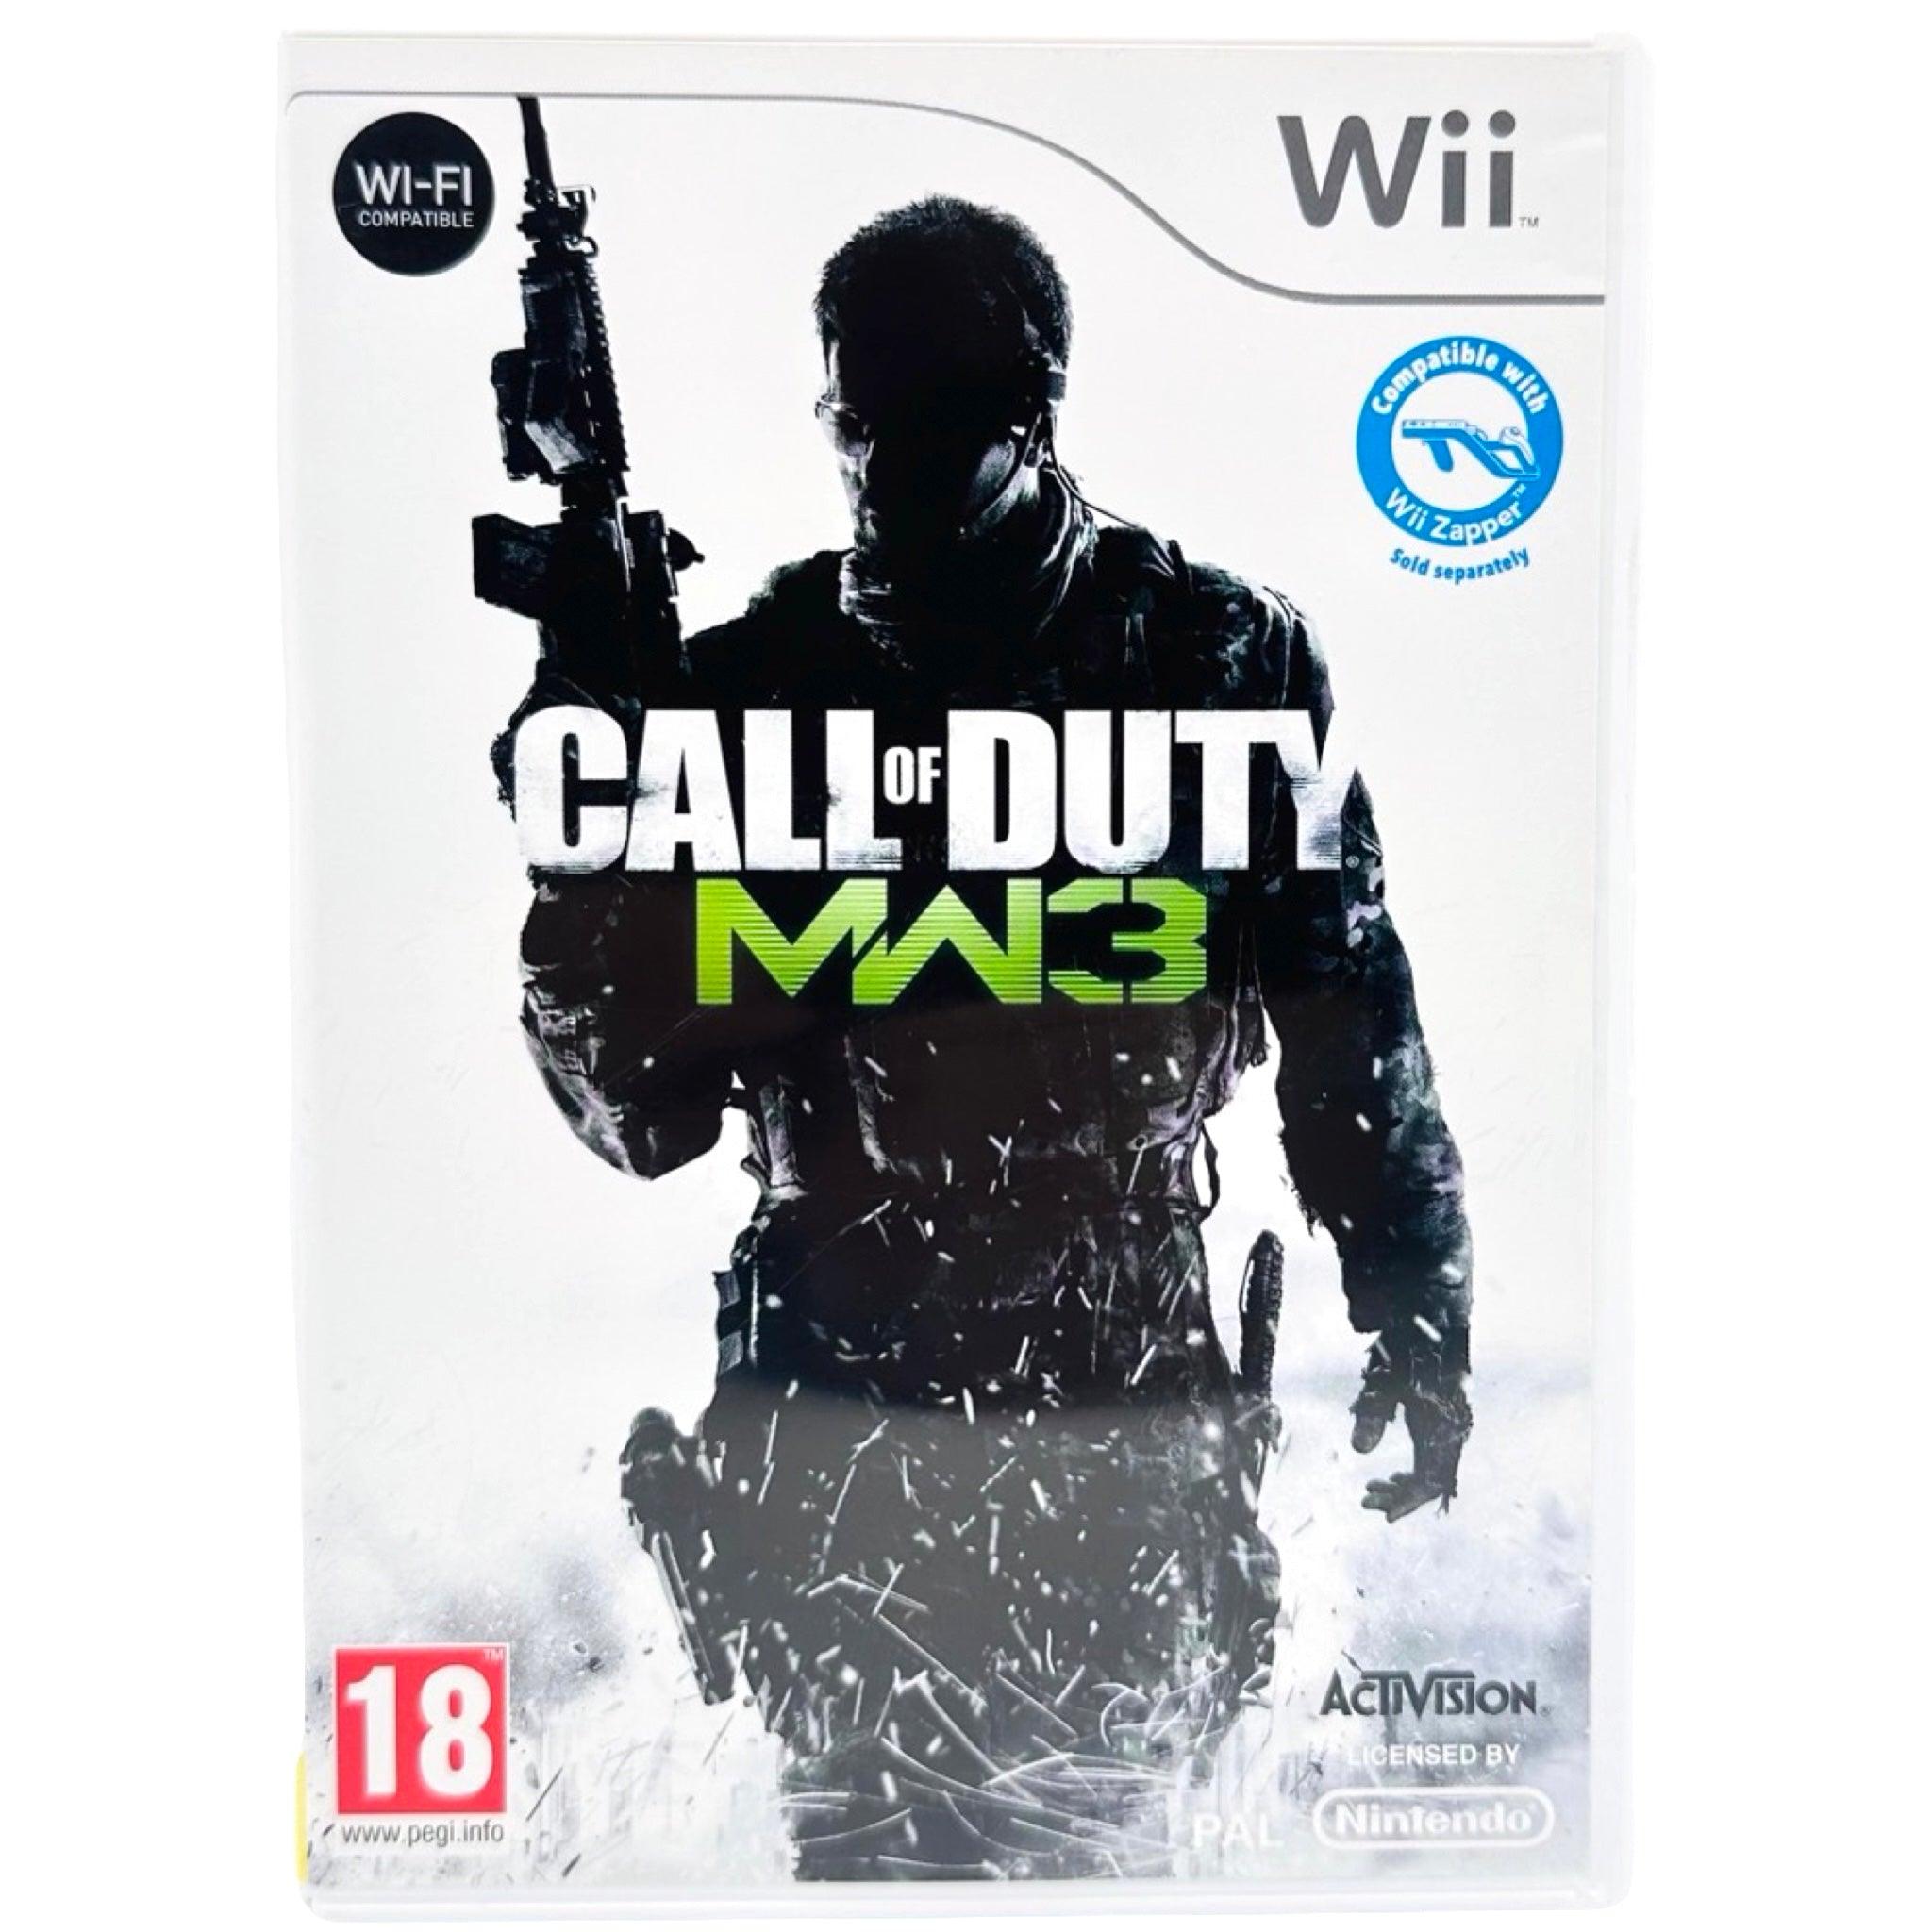 Wii: Call Of Duty: Modern Warfare 3 - RetroGaming.no